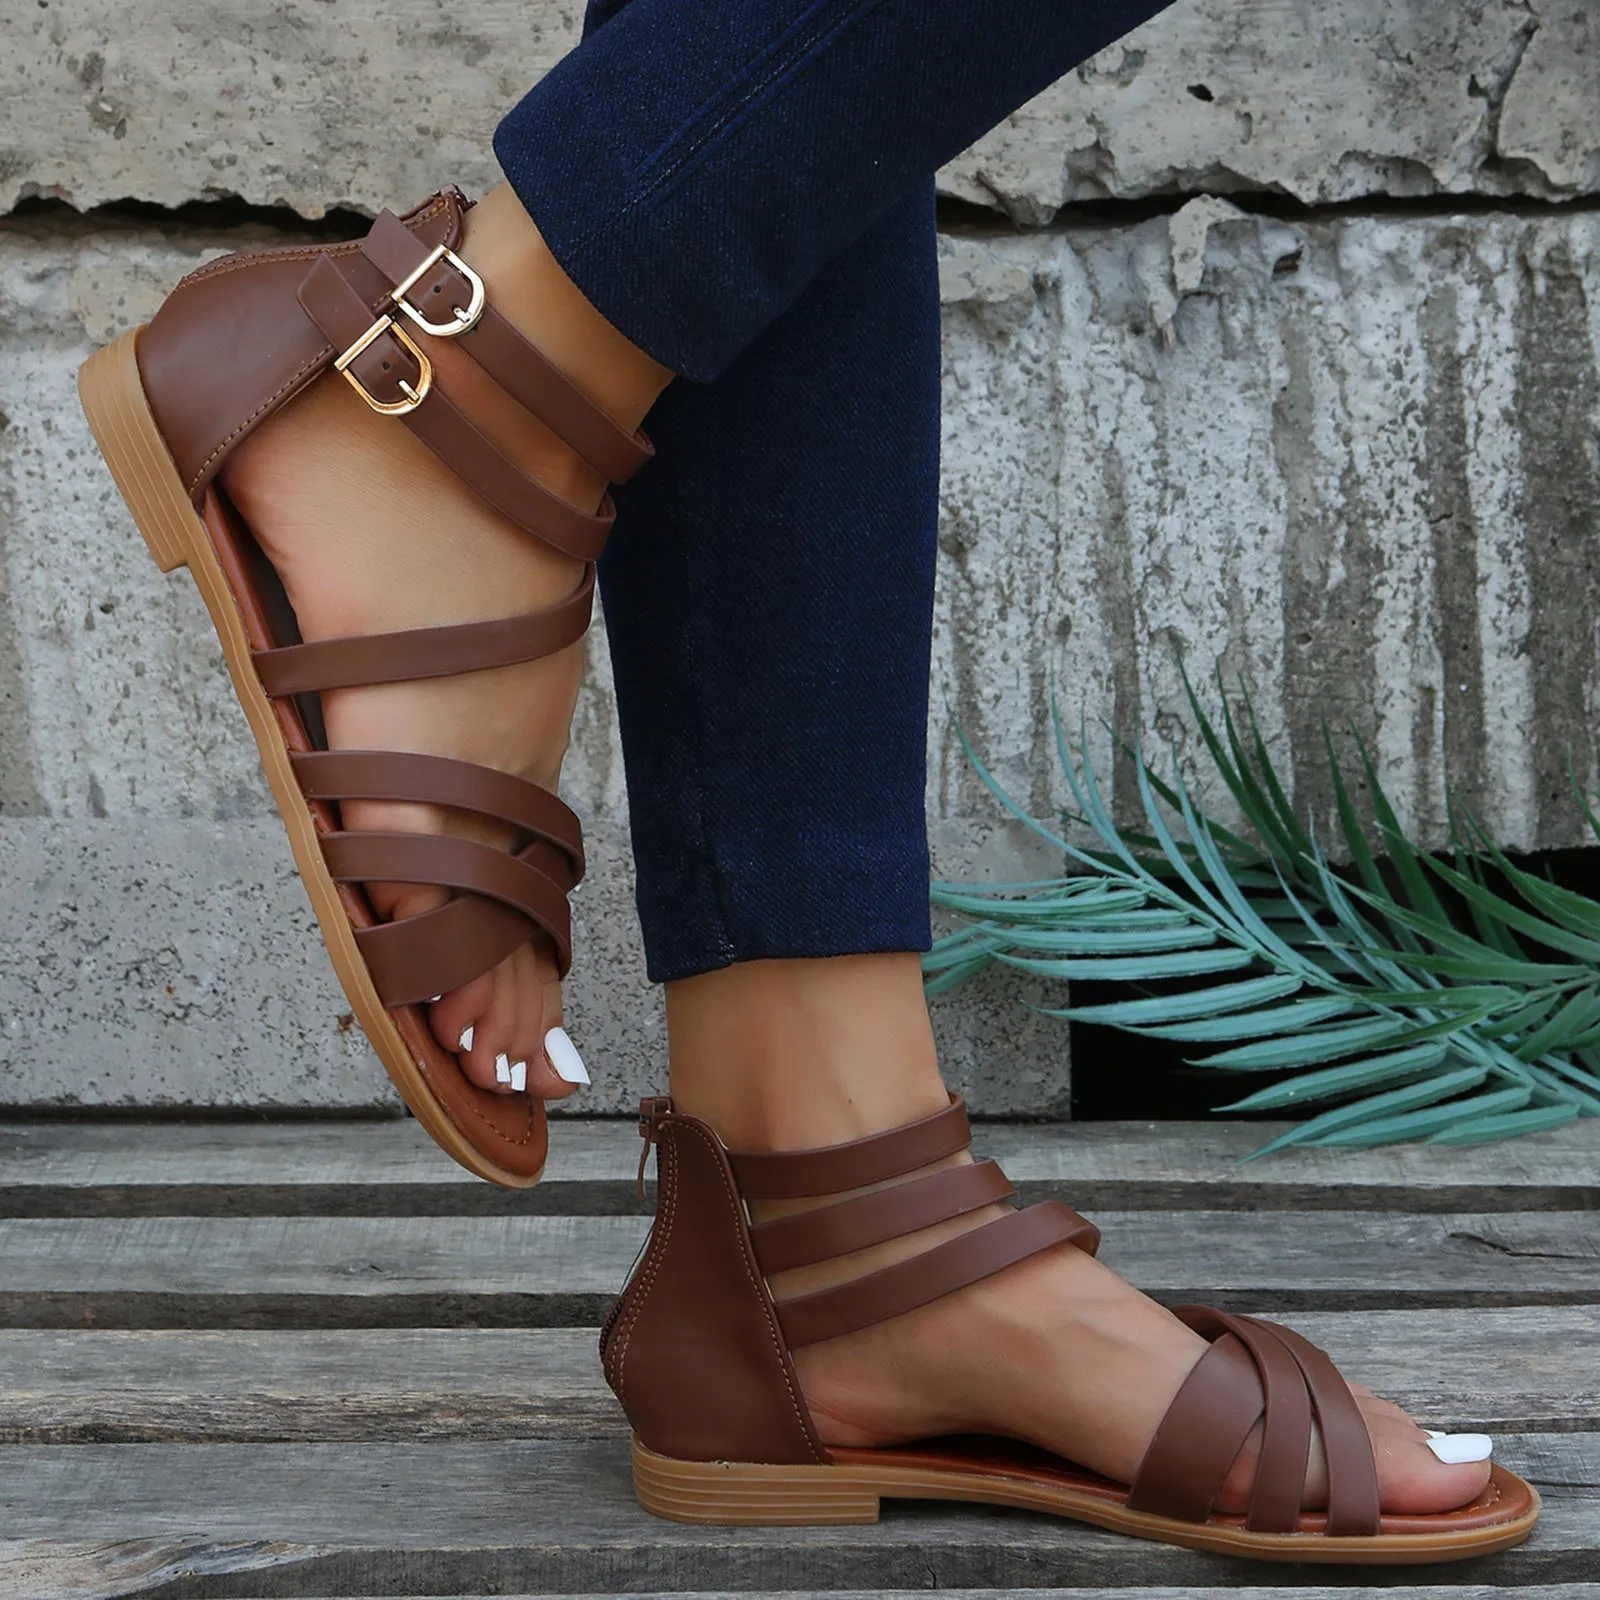 Aggregate 280+ brown gladiator sandals for women super hot